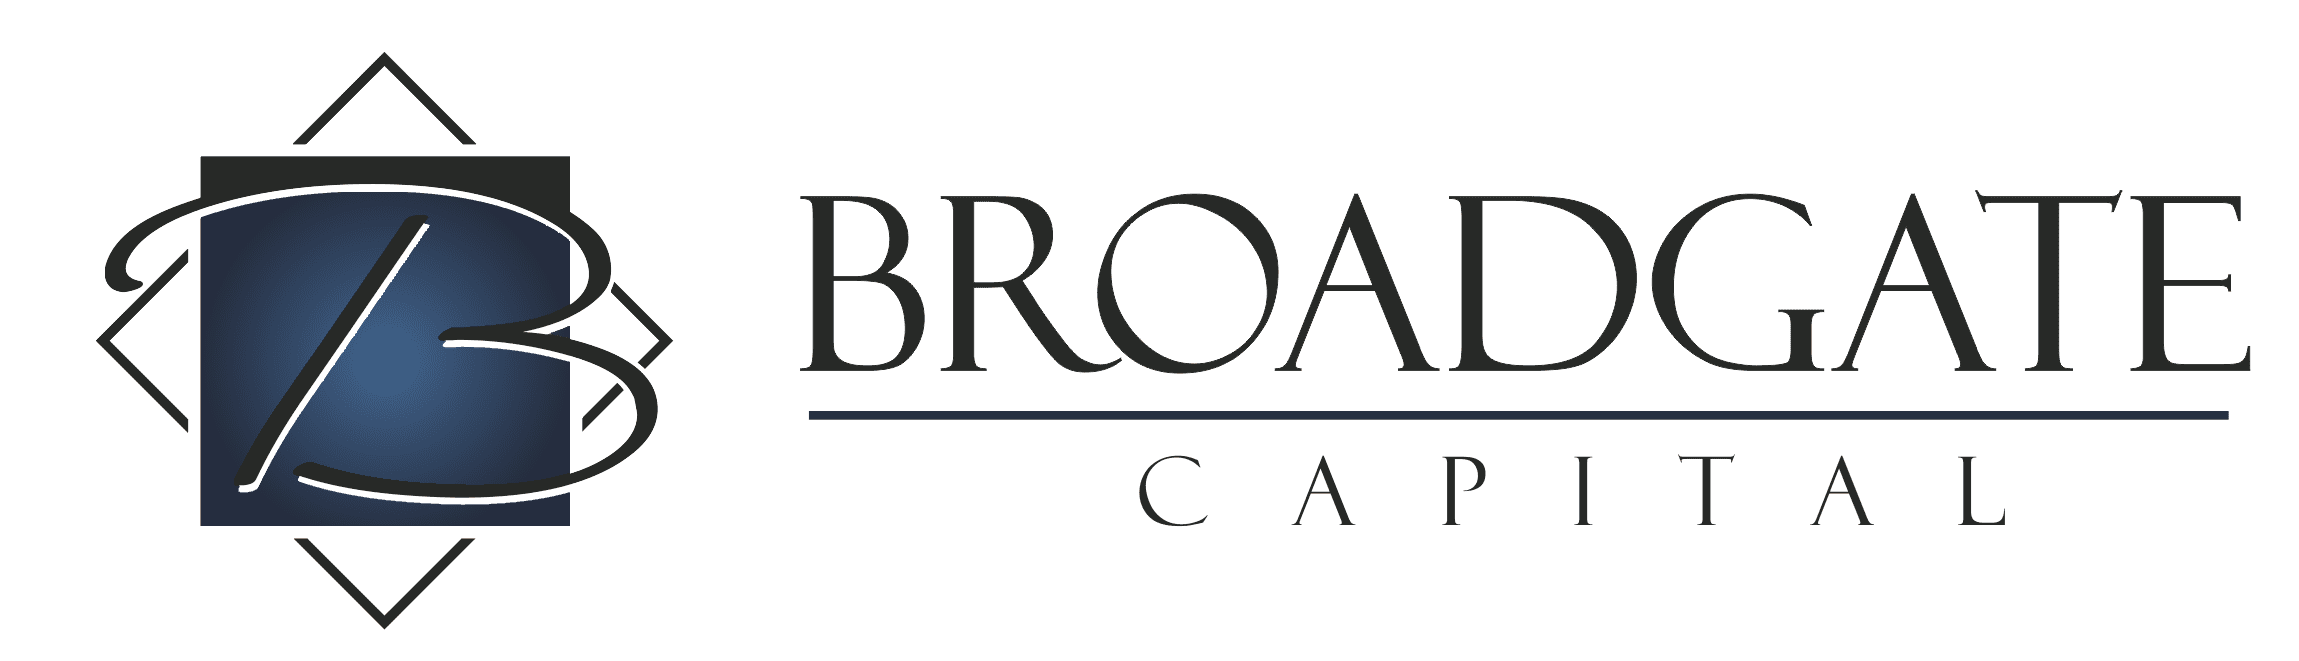 Broadgate Capital